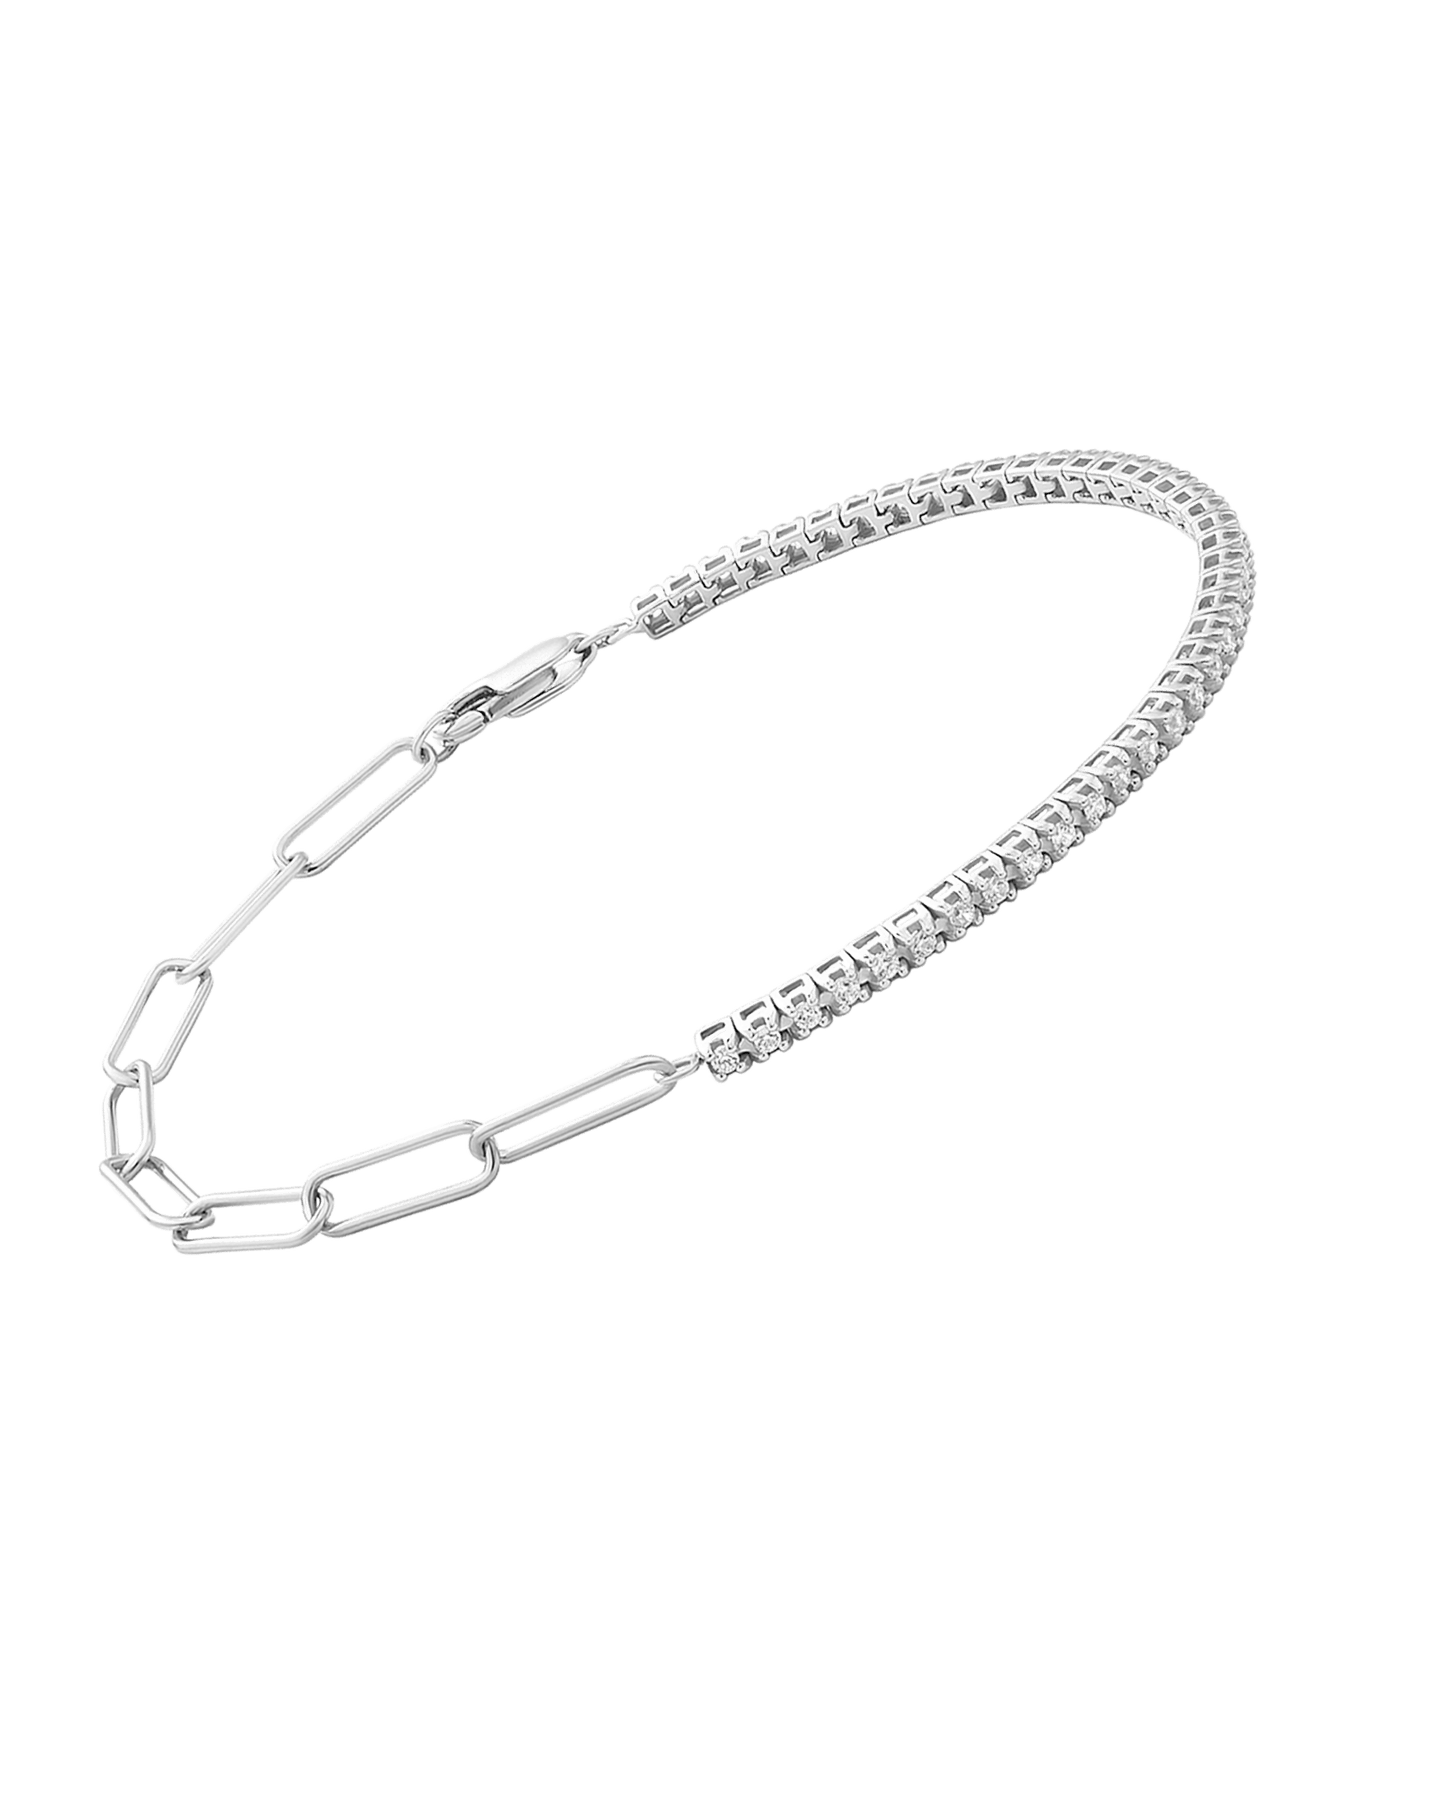 Diamond and Chain Bracelet - 14K White Gold Bracelets magal-dev 6" 